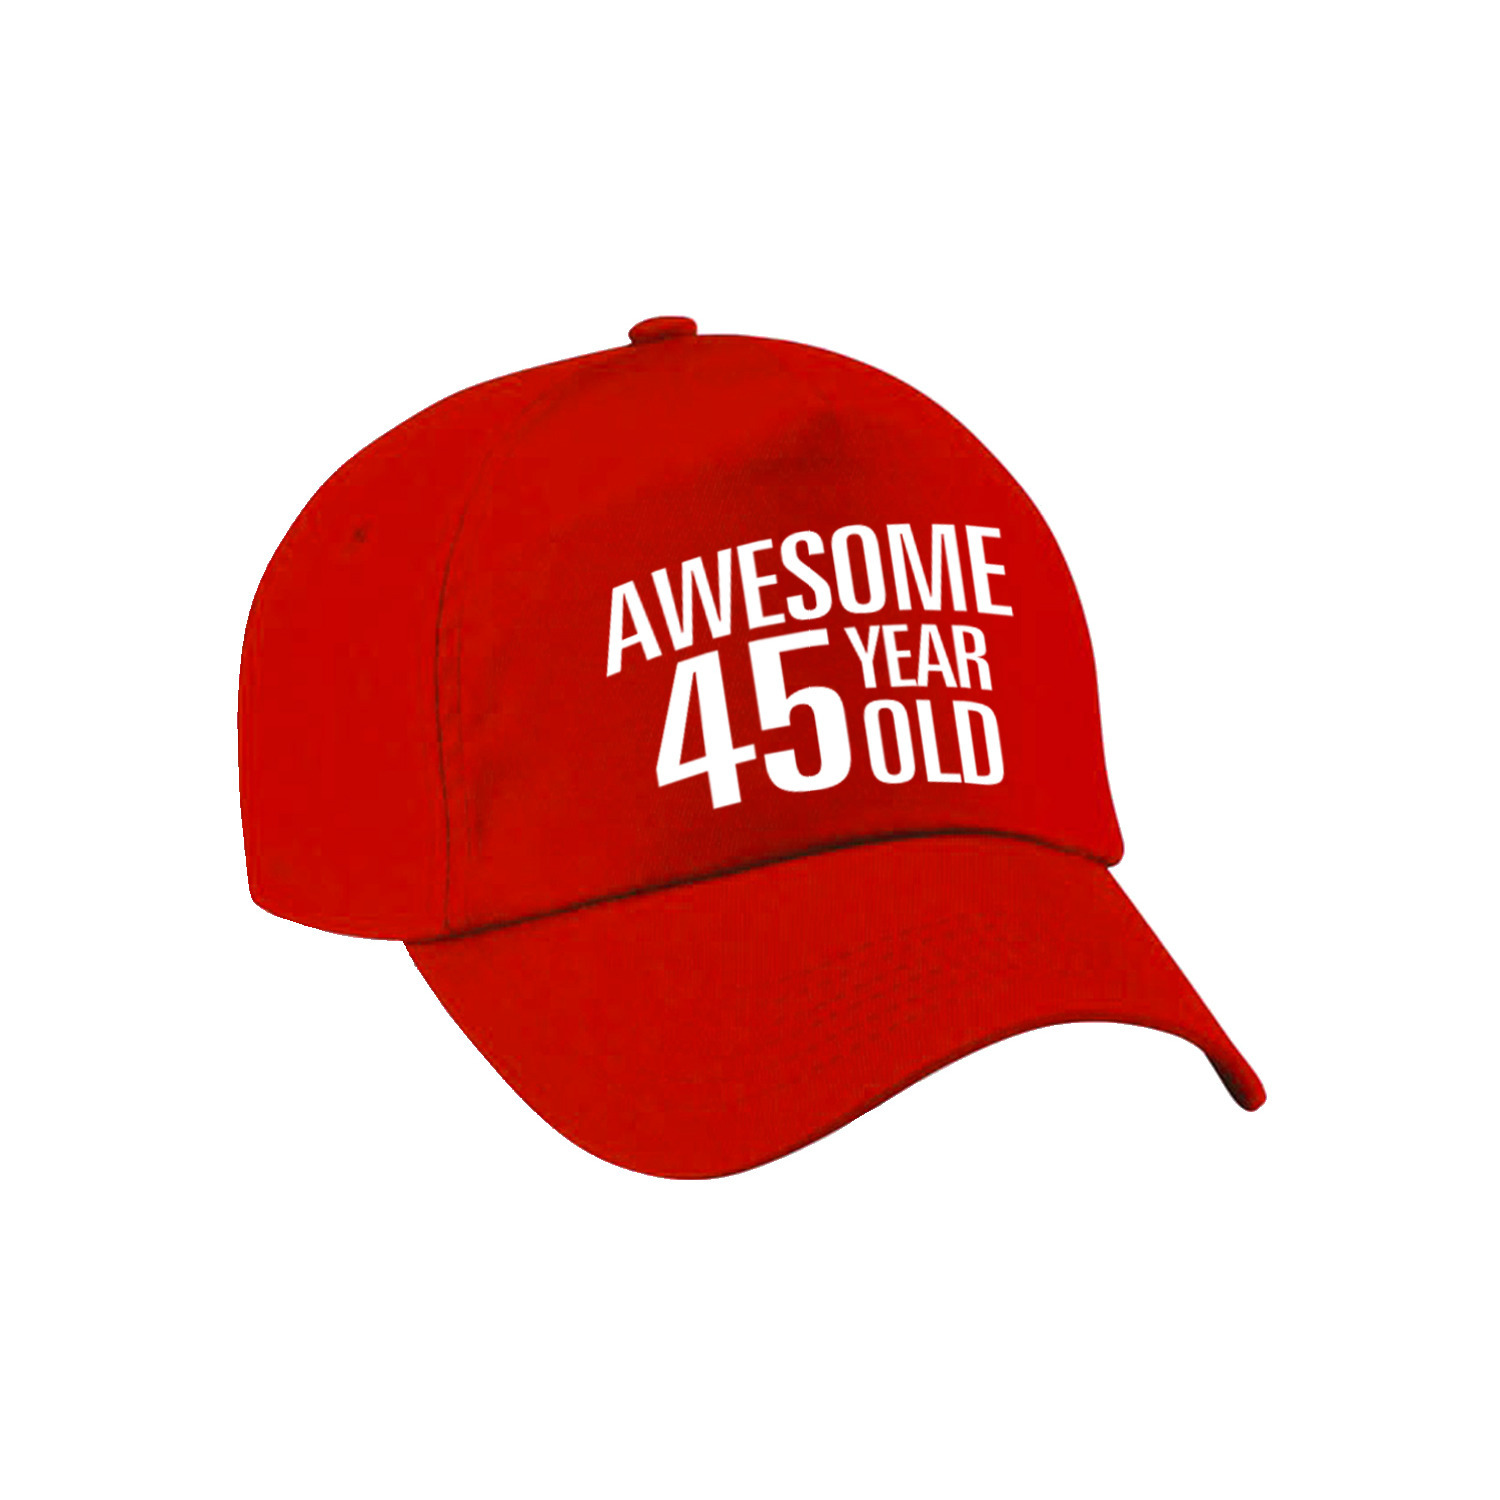 Awesome 45 year old verjaardag pet - cap rood voor dames en heren